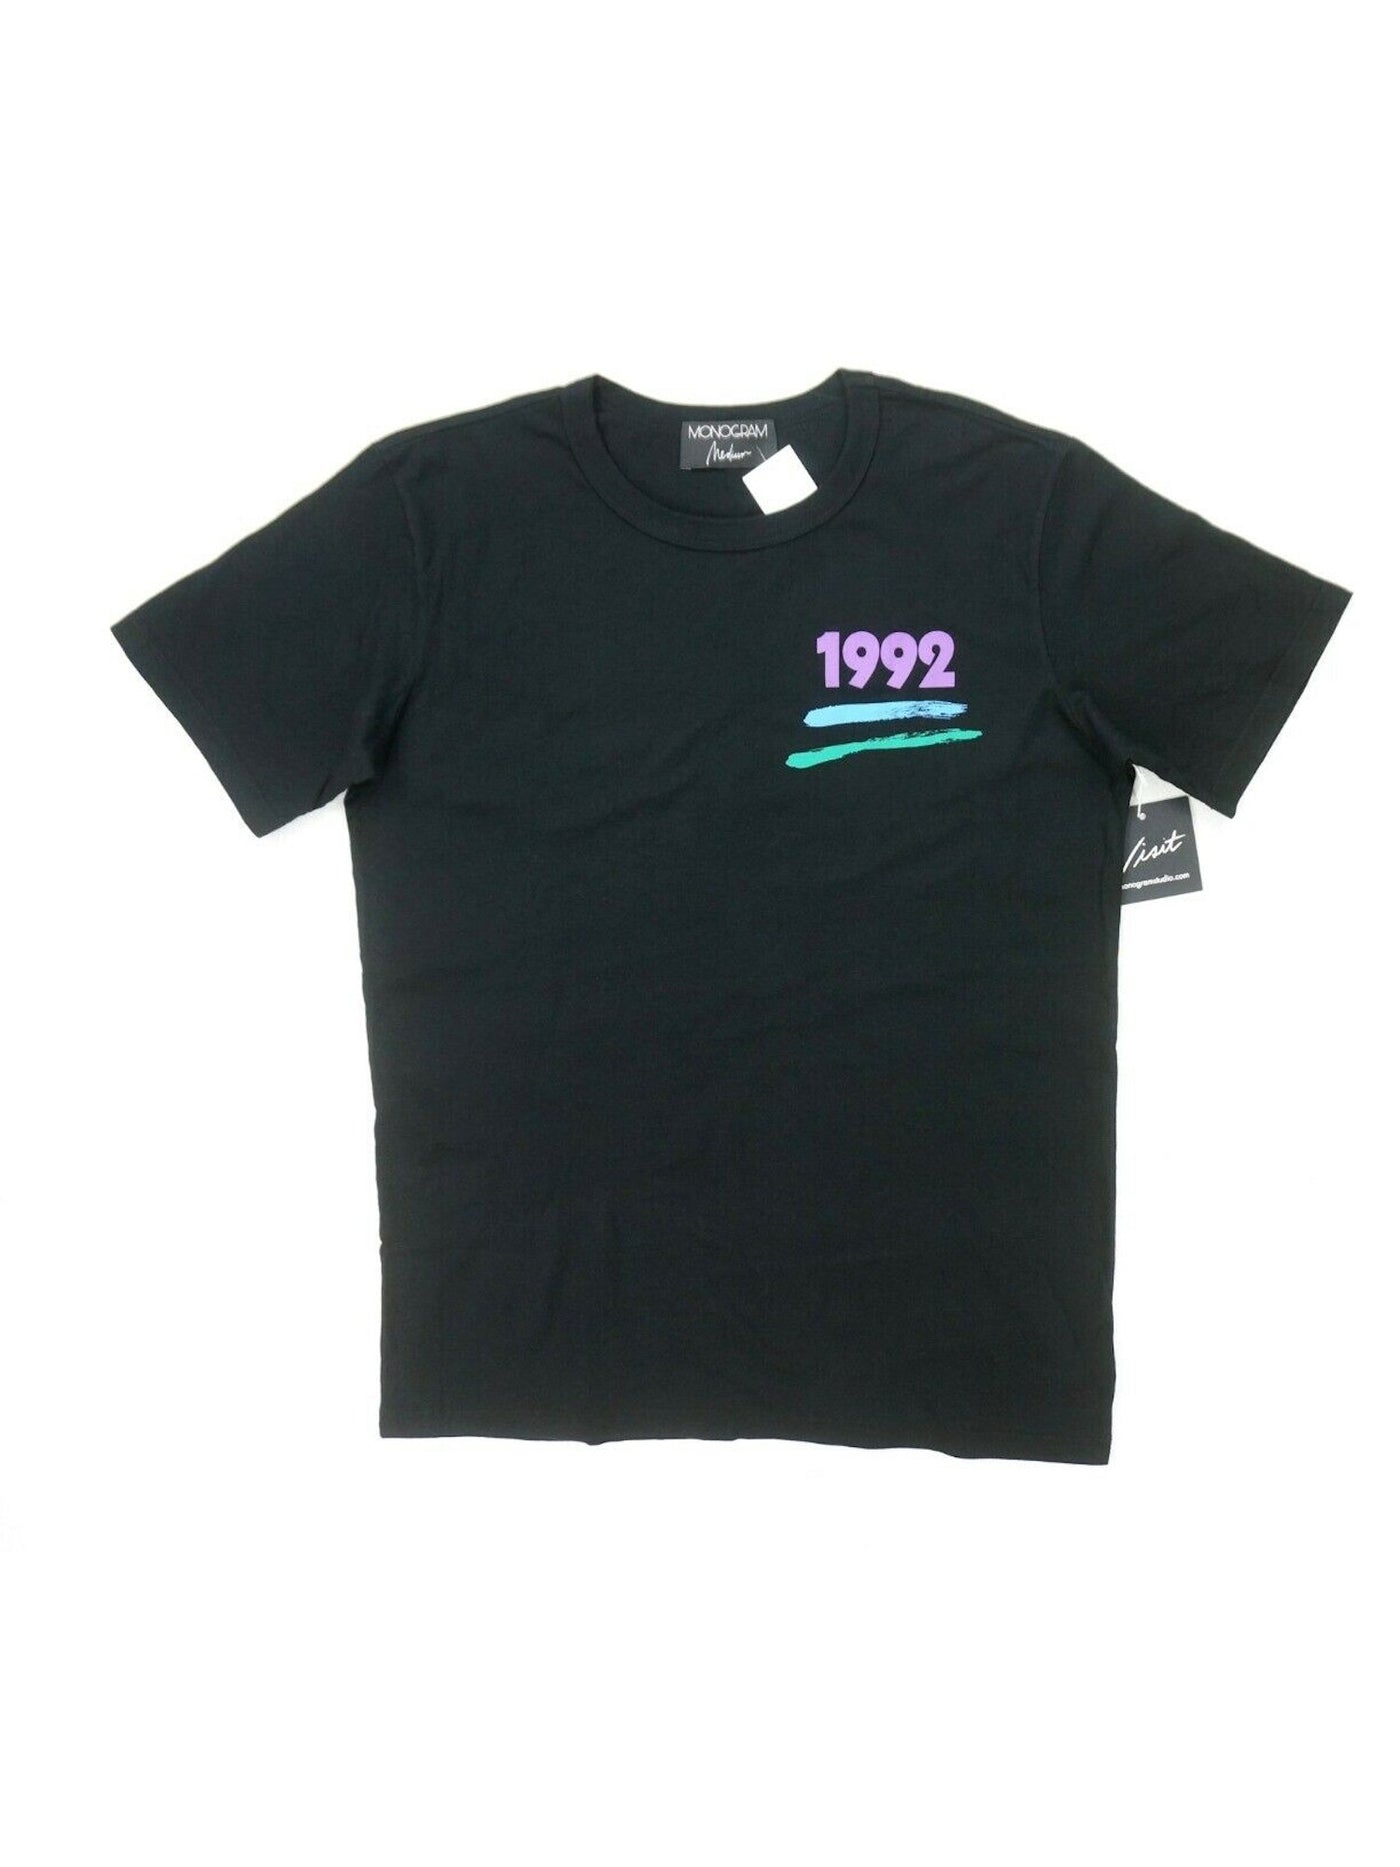 MONOGRAM Mens Black Lightweight, Graphic Classic Fit T-Shirt L